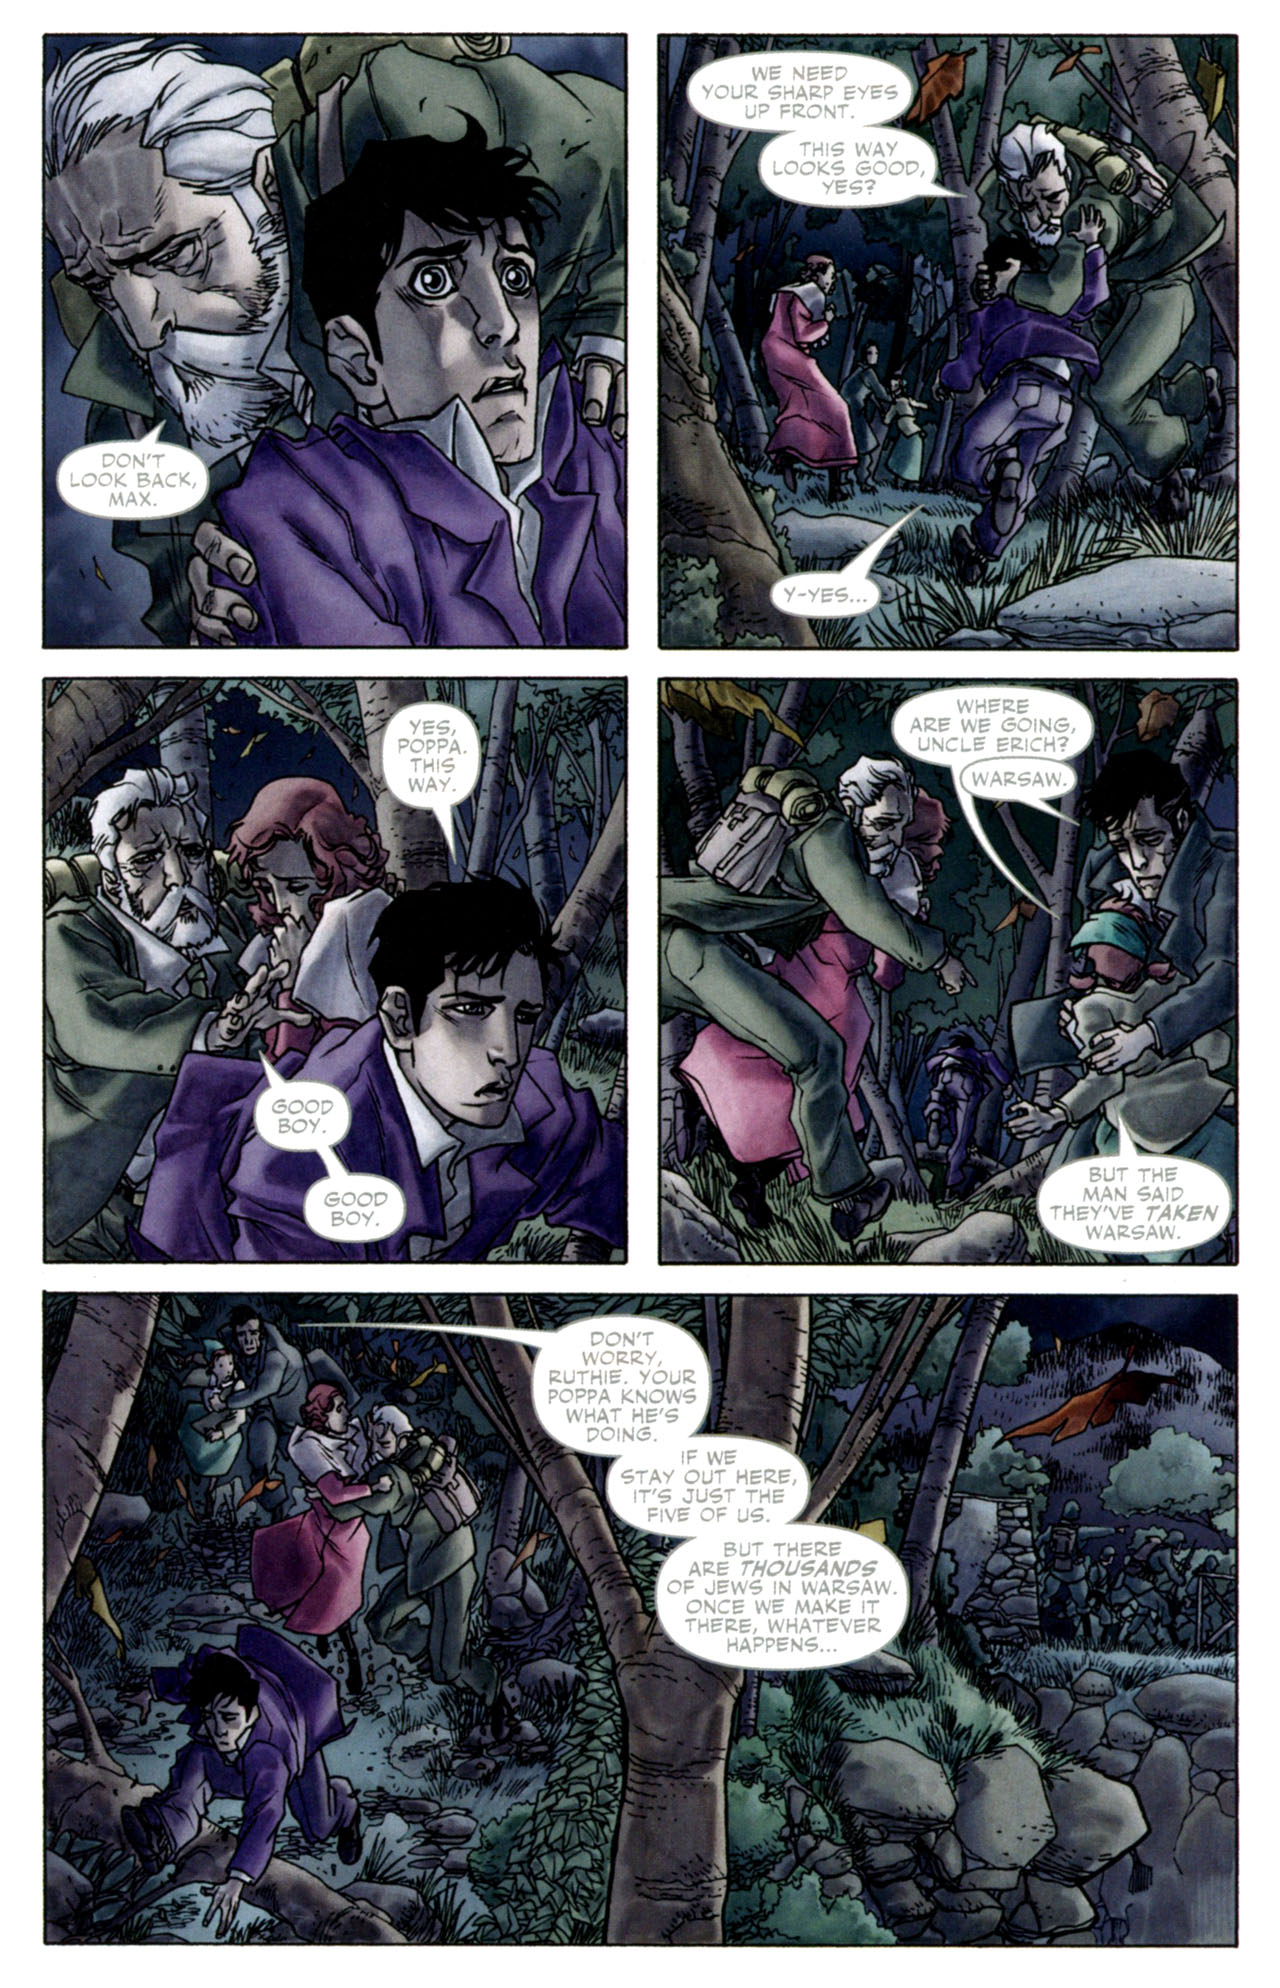 X-Men: Magneto Testament #3 - Part 3 of 5 